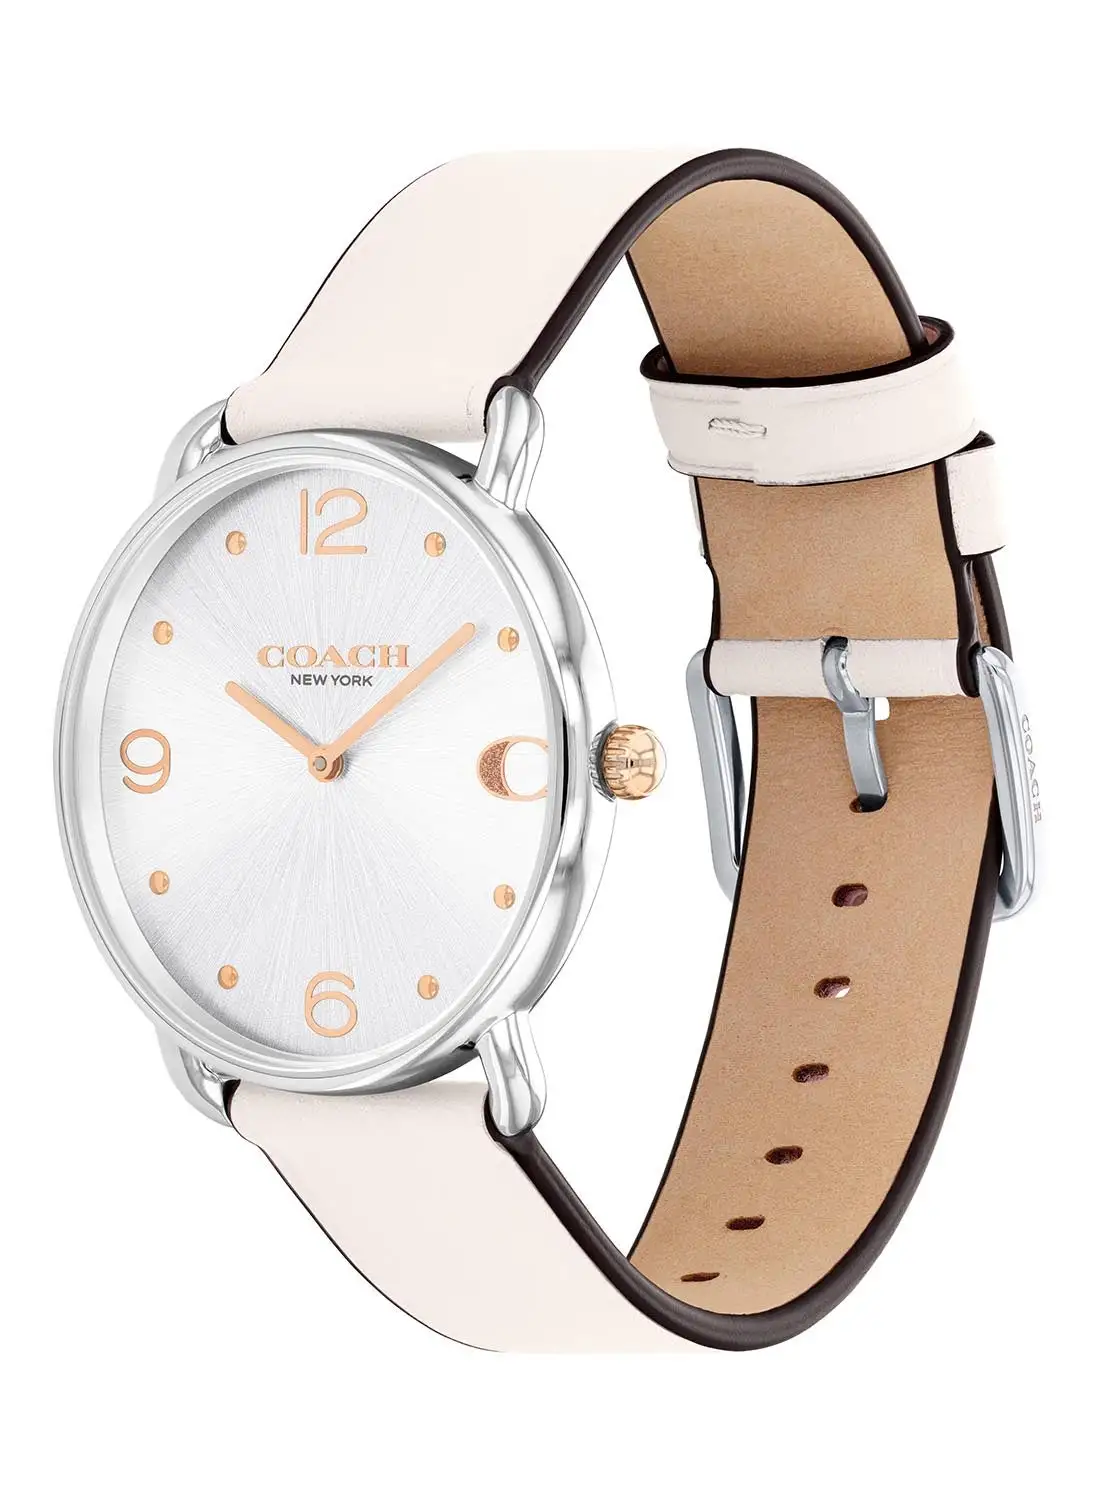 COACH Women's Analog Round Shape Leather Wrist Watch 14504200 - 36 Mm